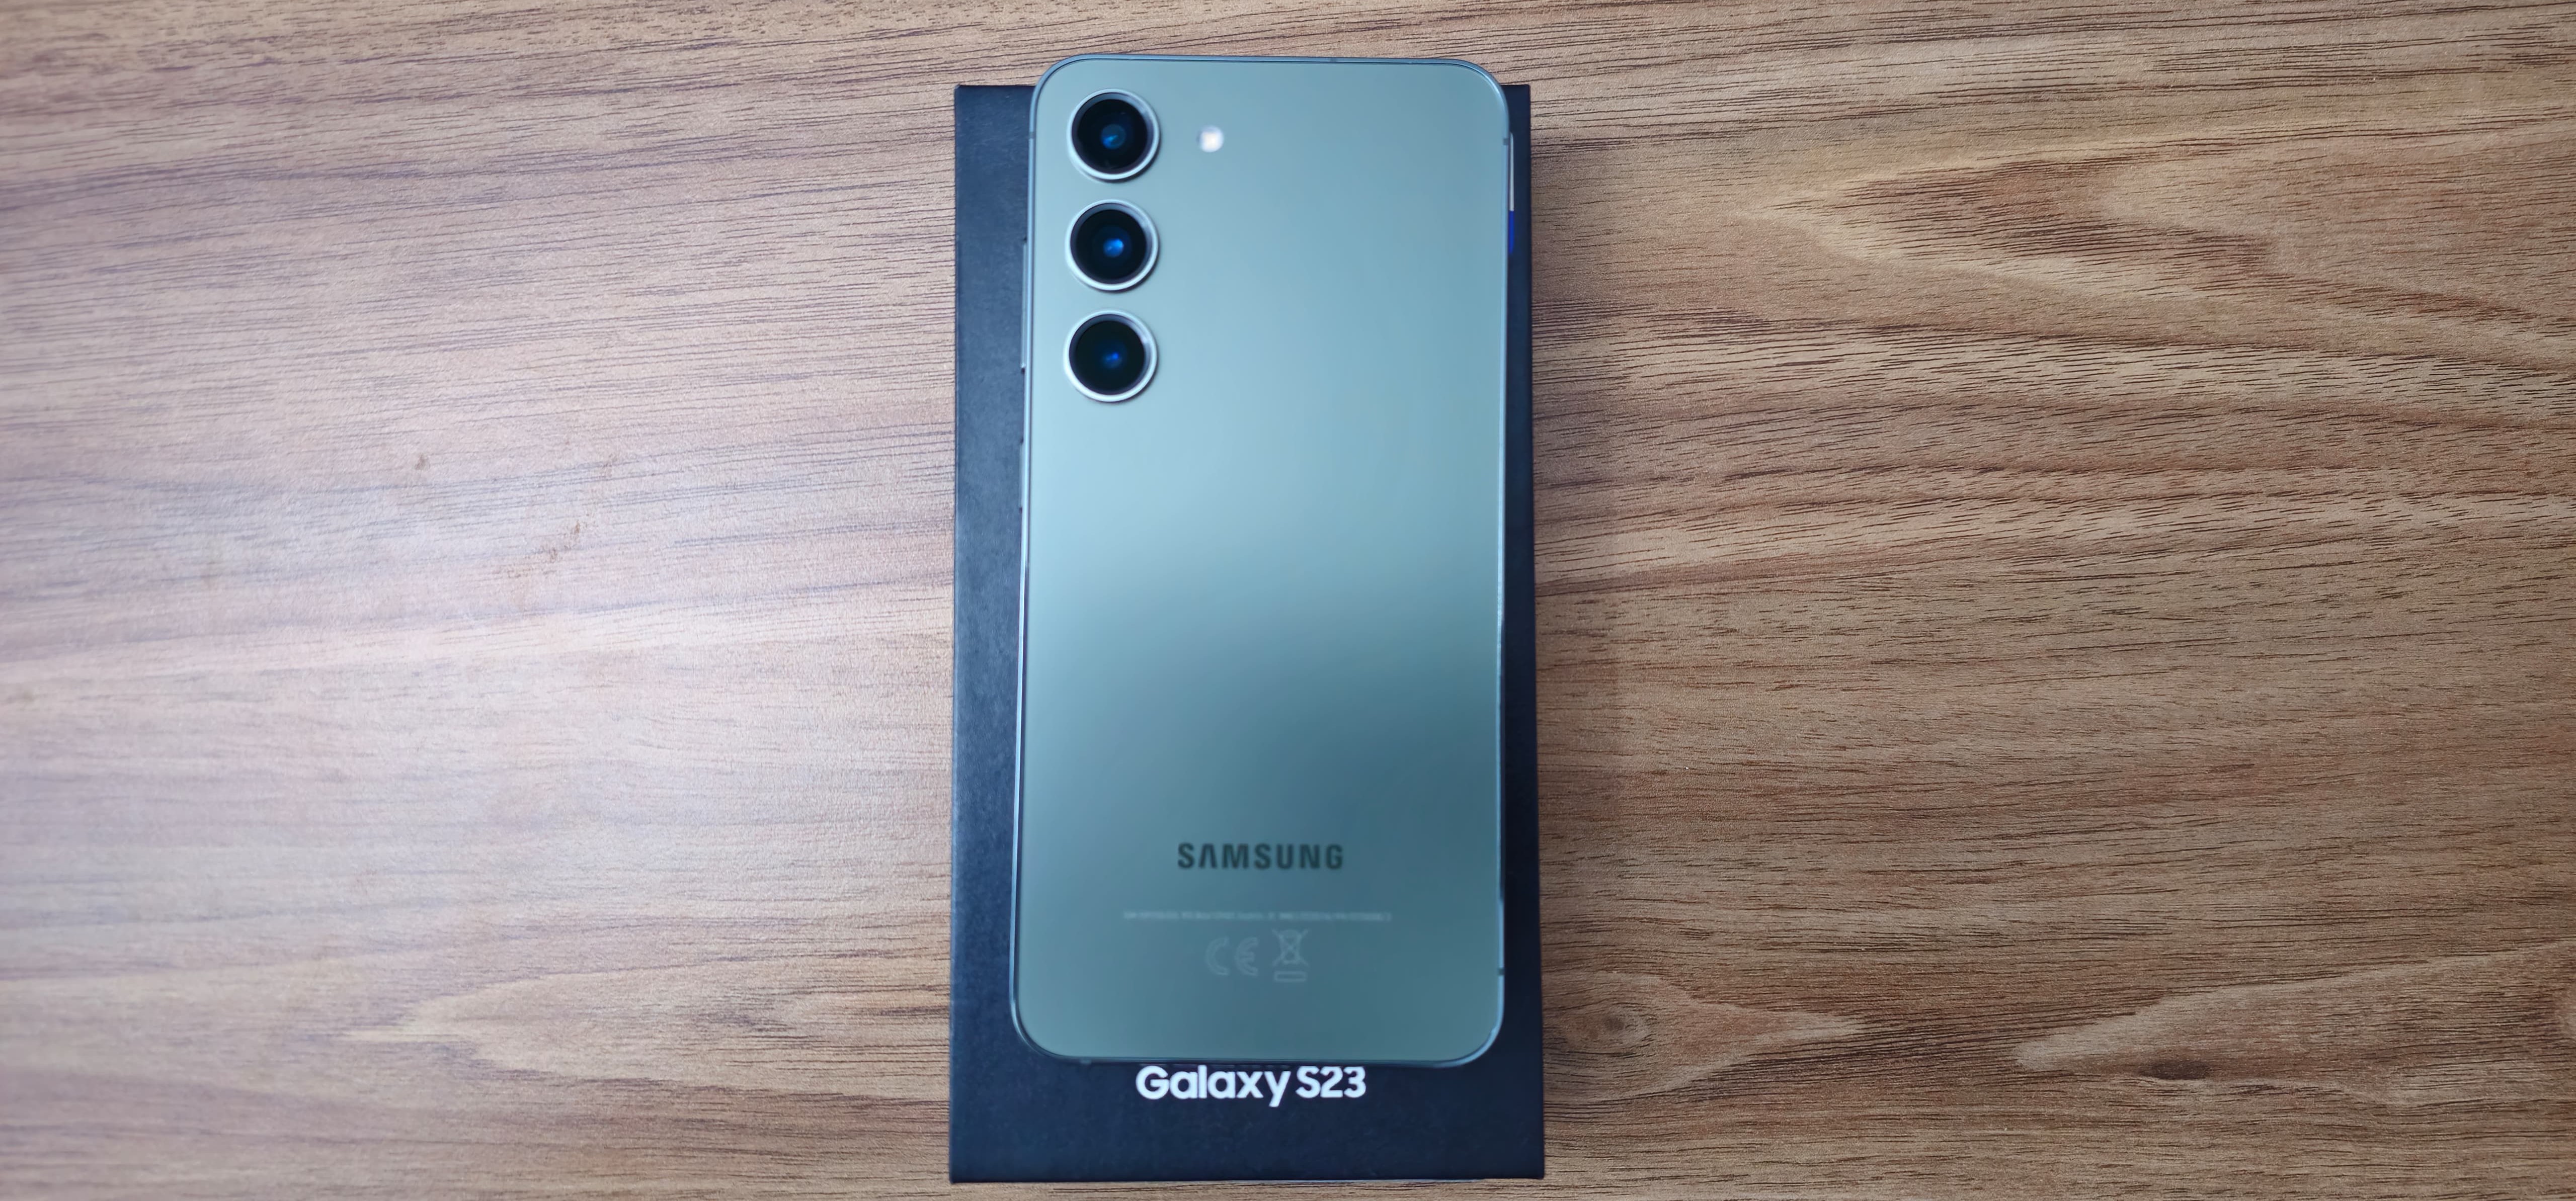 SATILDI] Hediyeli Sıfır Ayarında Samsung Galaxy S23 256 GB - Vatan  Bilgisayar Faturalı | DonanımHaber Forum